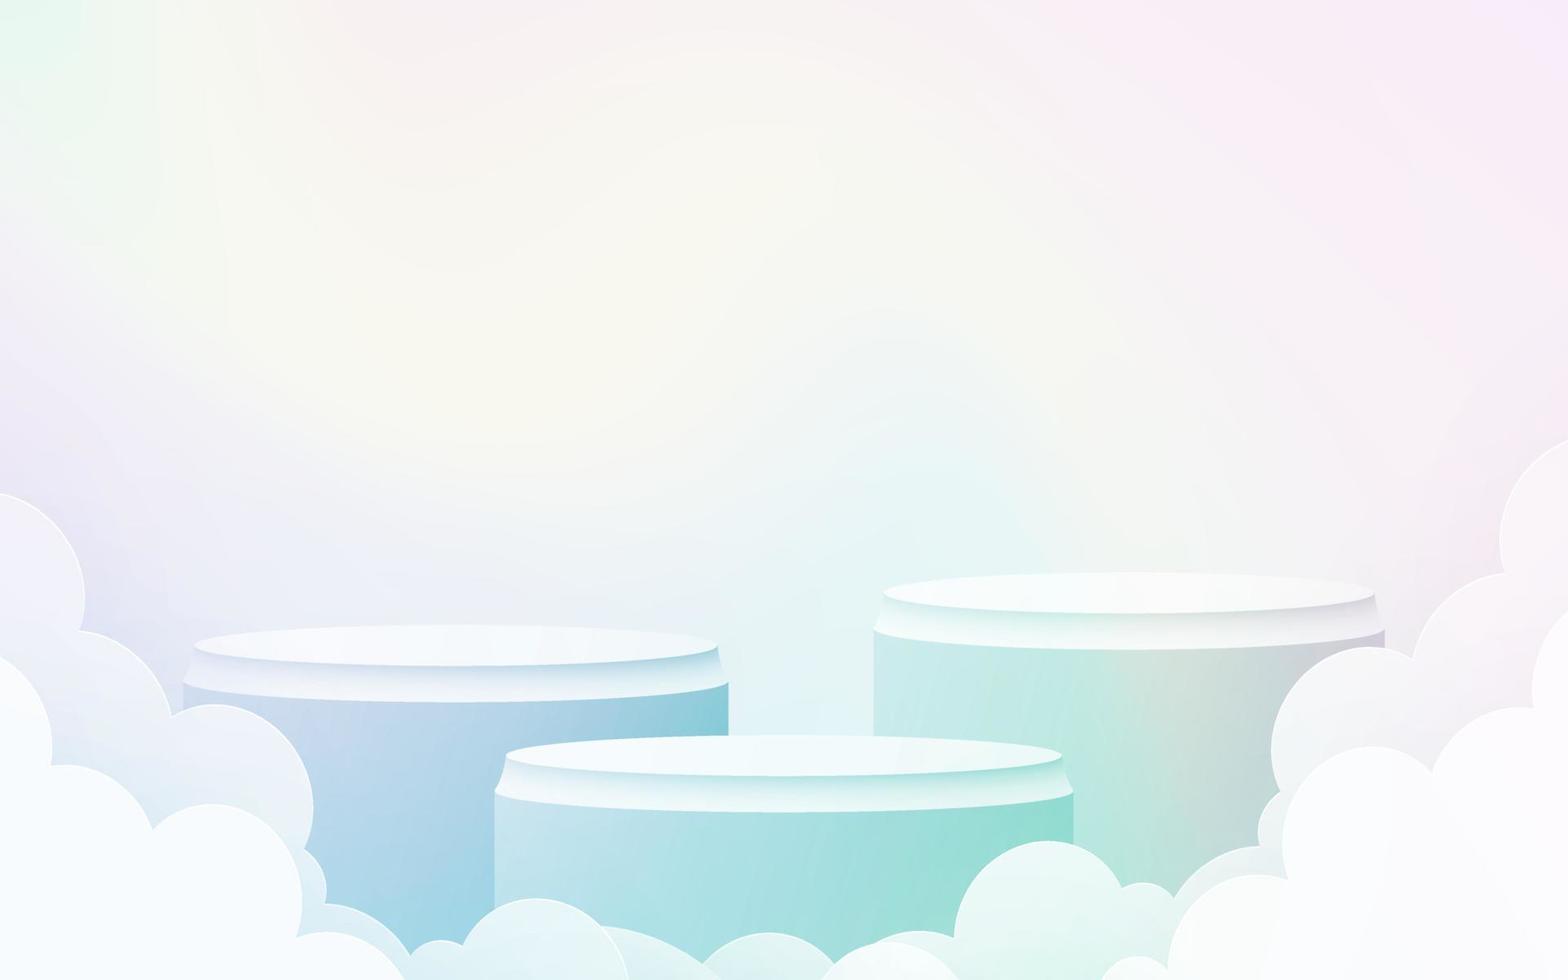 Pastel color 3D podium with paper cut clouds background design. Vector illustration. Eps10